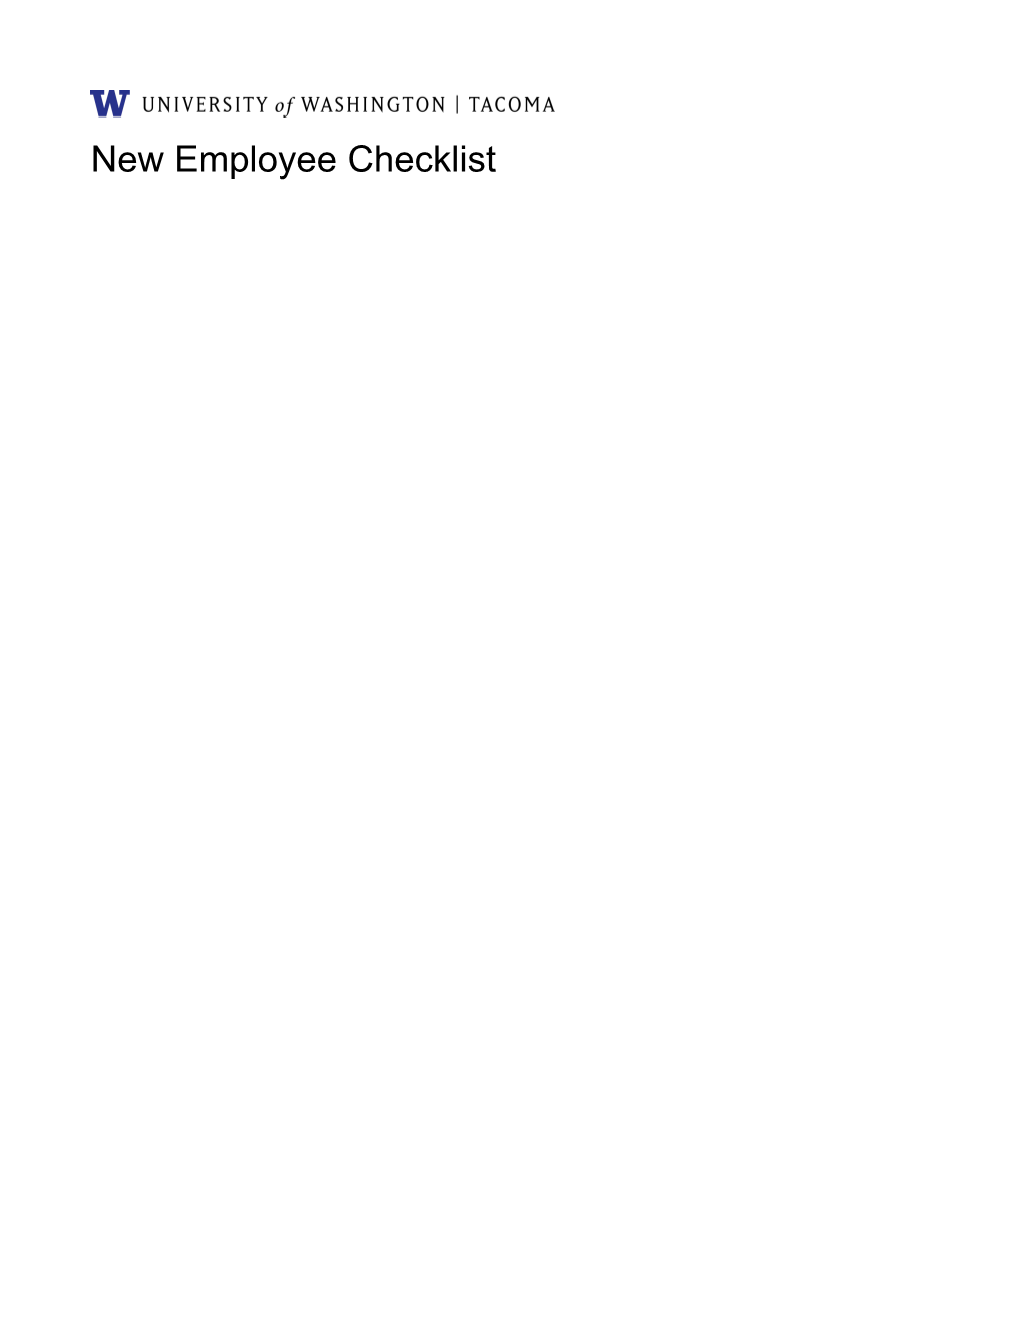 Orientation Plan for New Employee